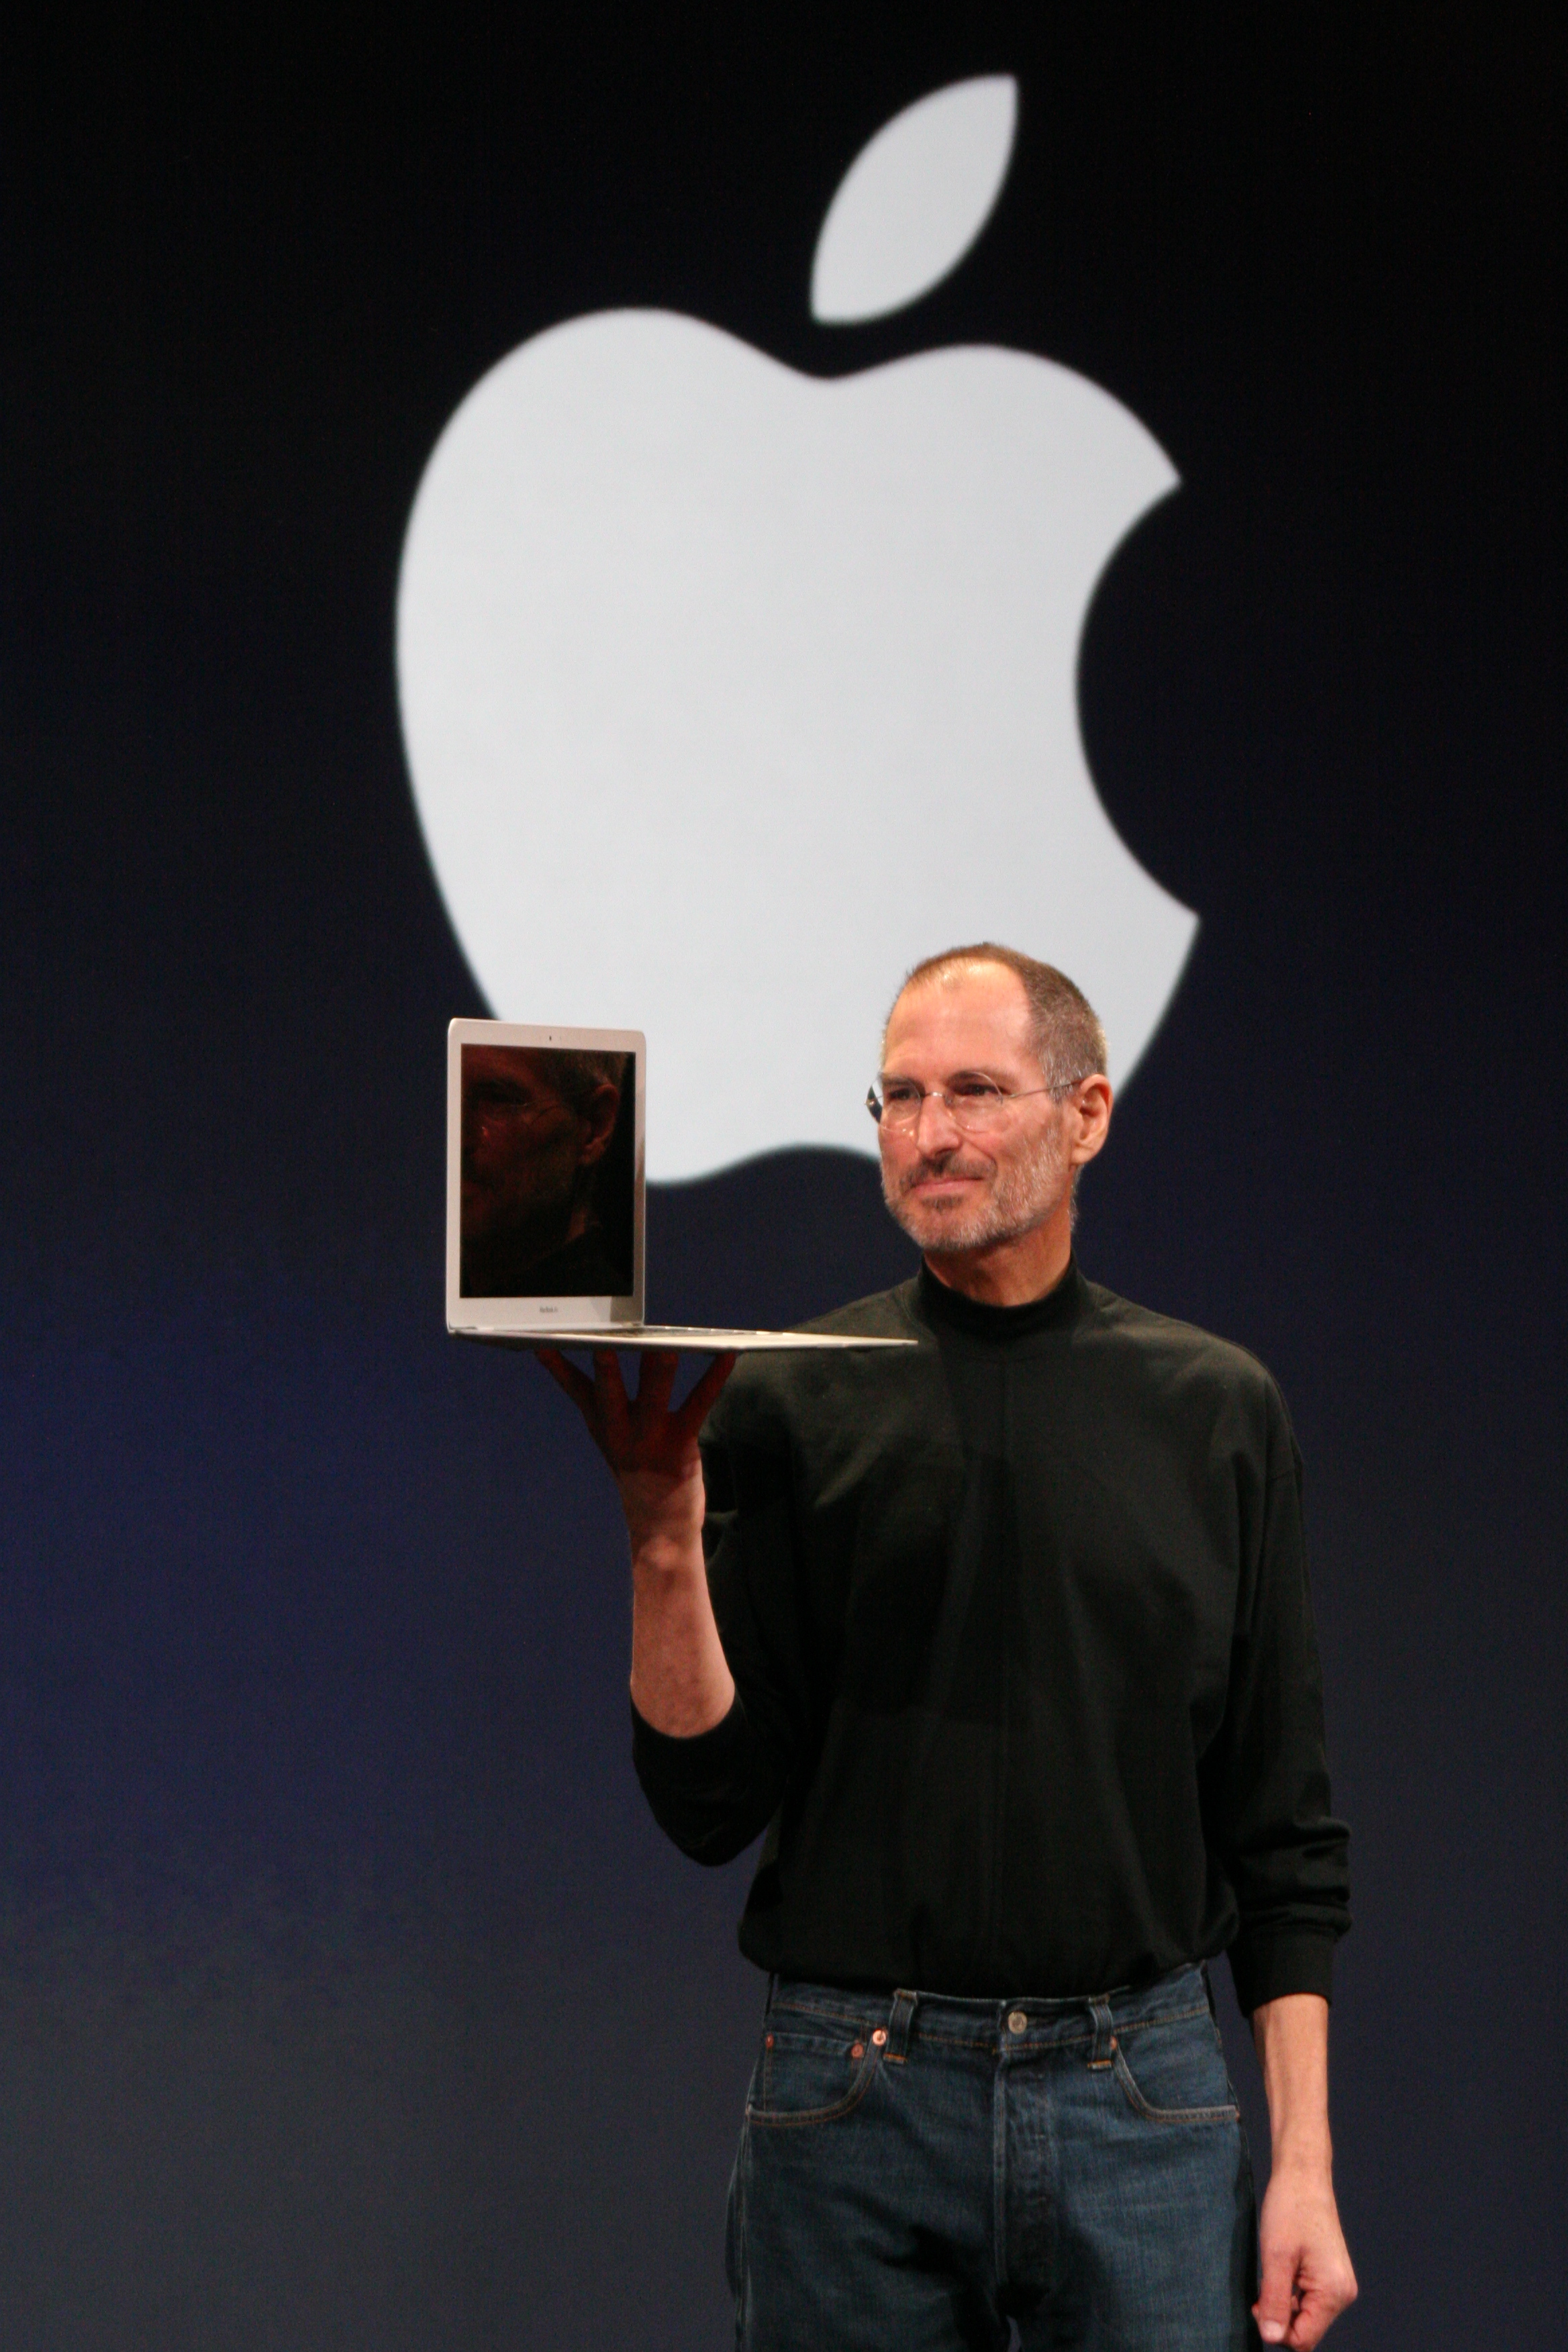 Steve Jobs introduces 'MacBook Air' at MacWorld Conference & Expo 2008, Moscone Center, San Francisco, California, January 2008.